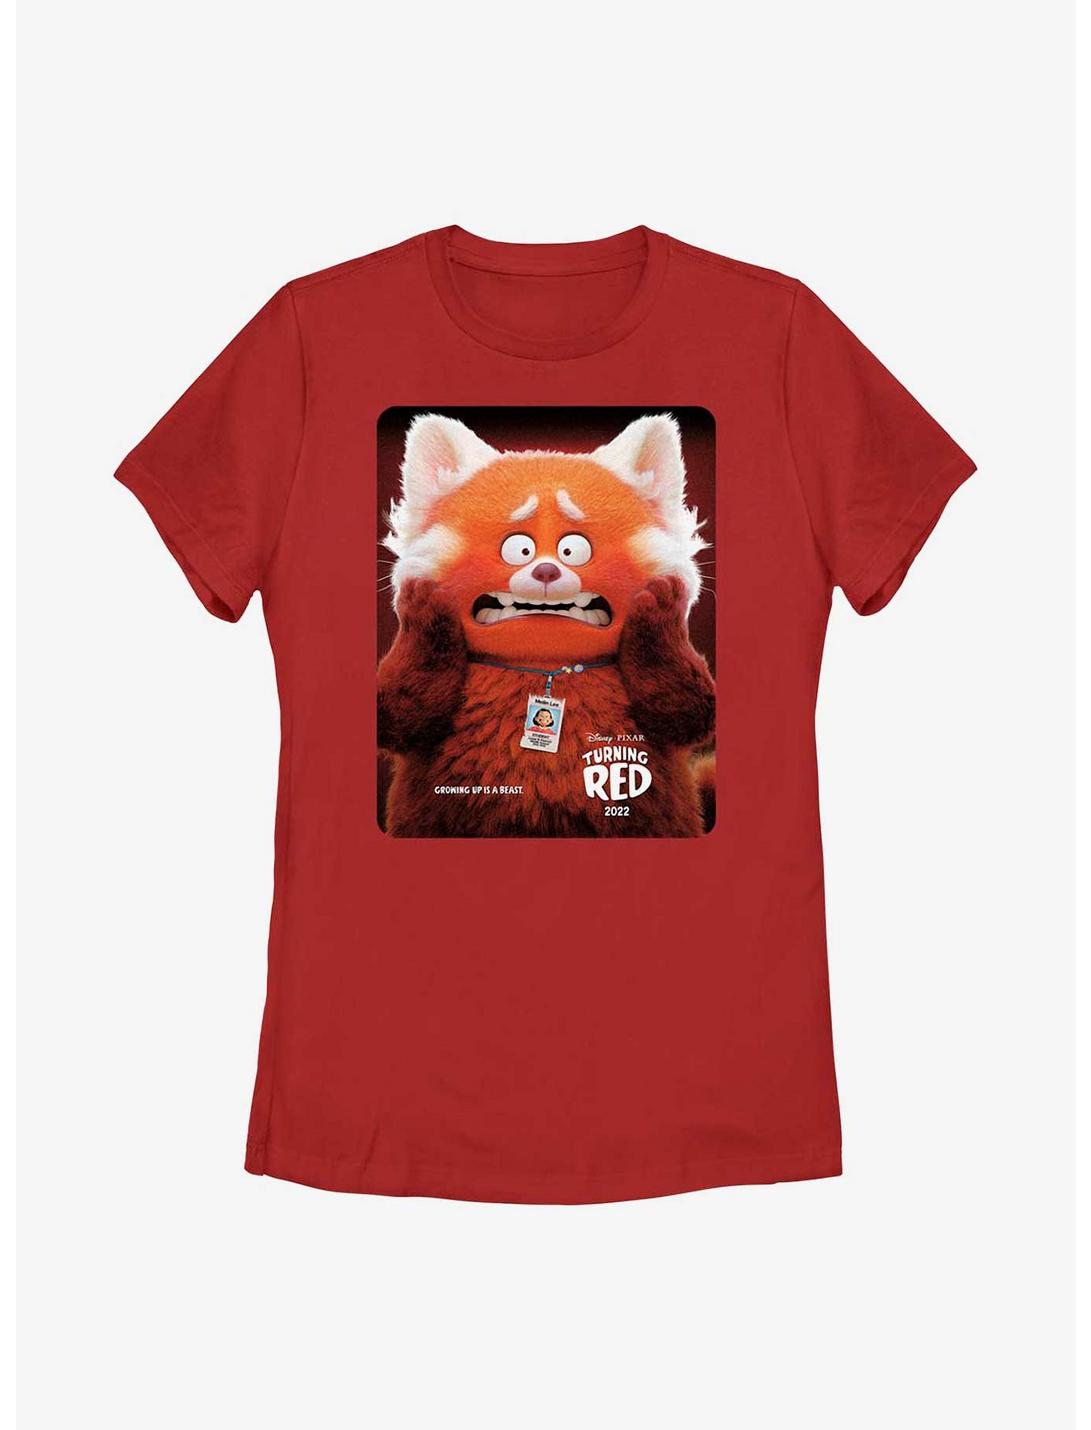 Disney Pixar Turning Red Panda Poster Womens T-Shirt, RED, hi-res